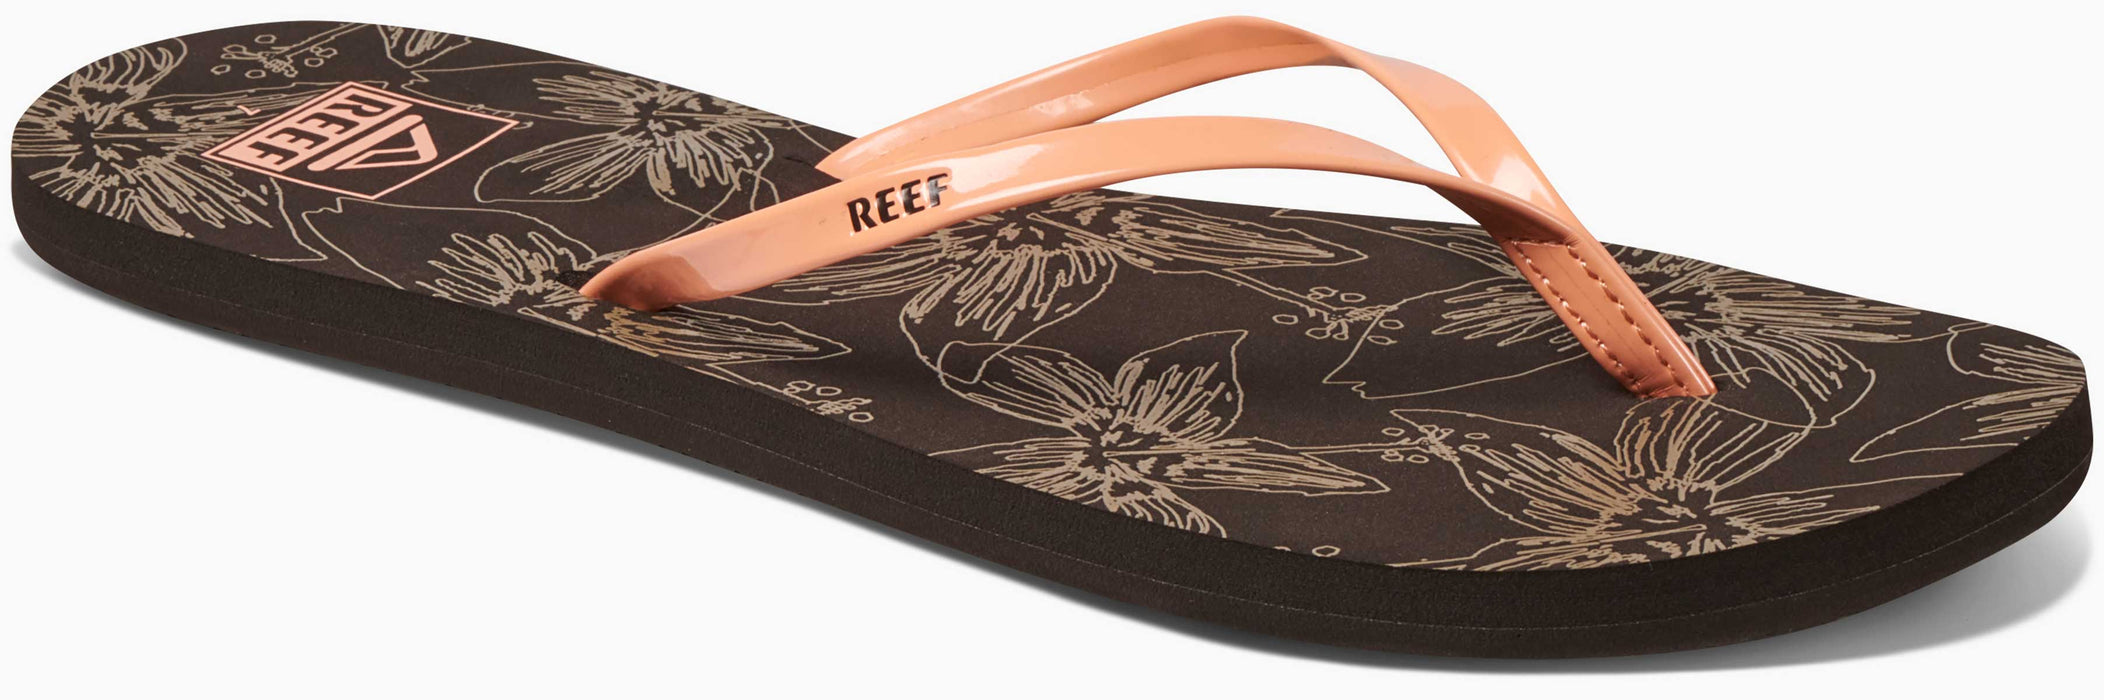 Reef Ladies' Bliss-Full Sandal 2020